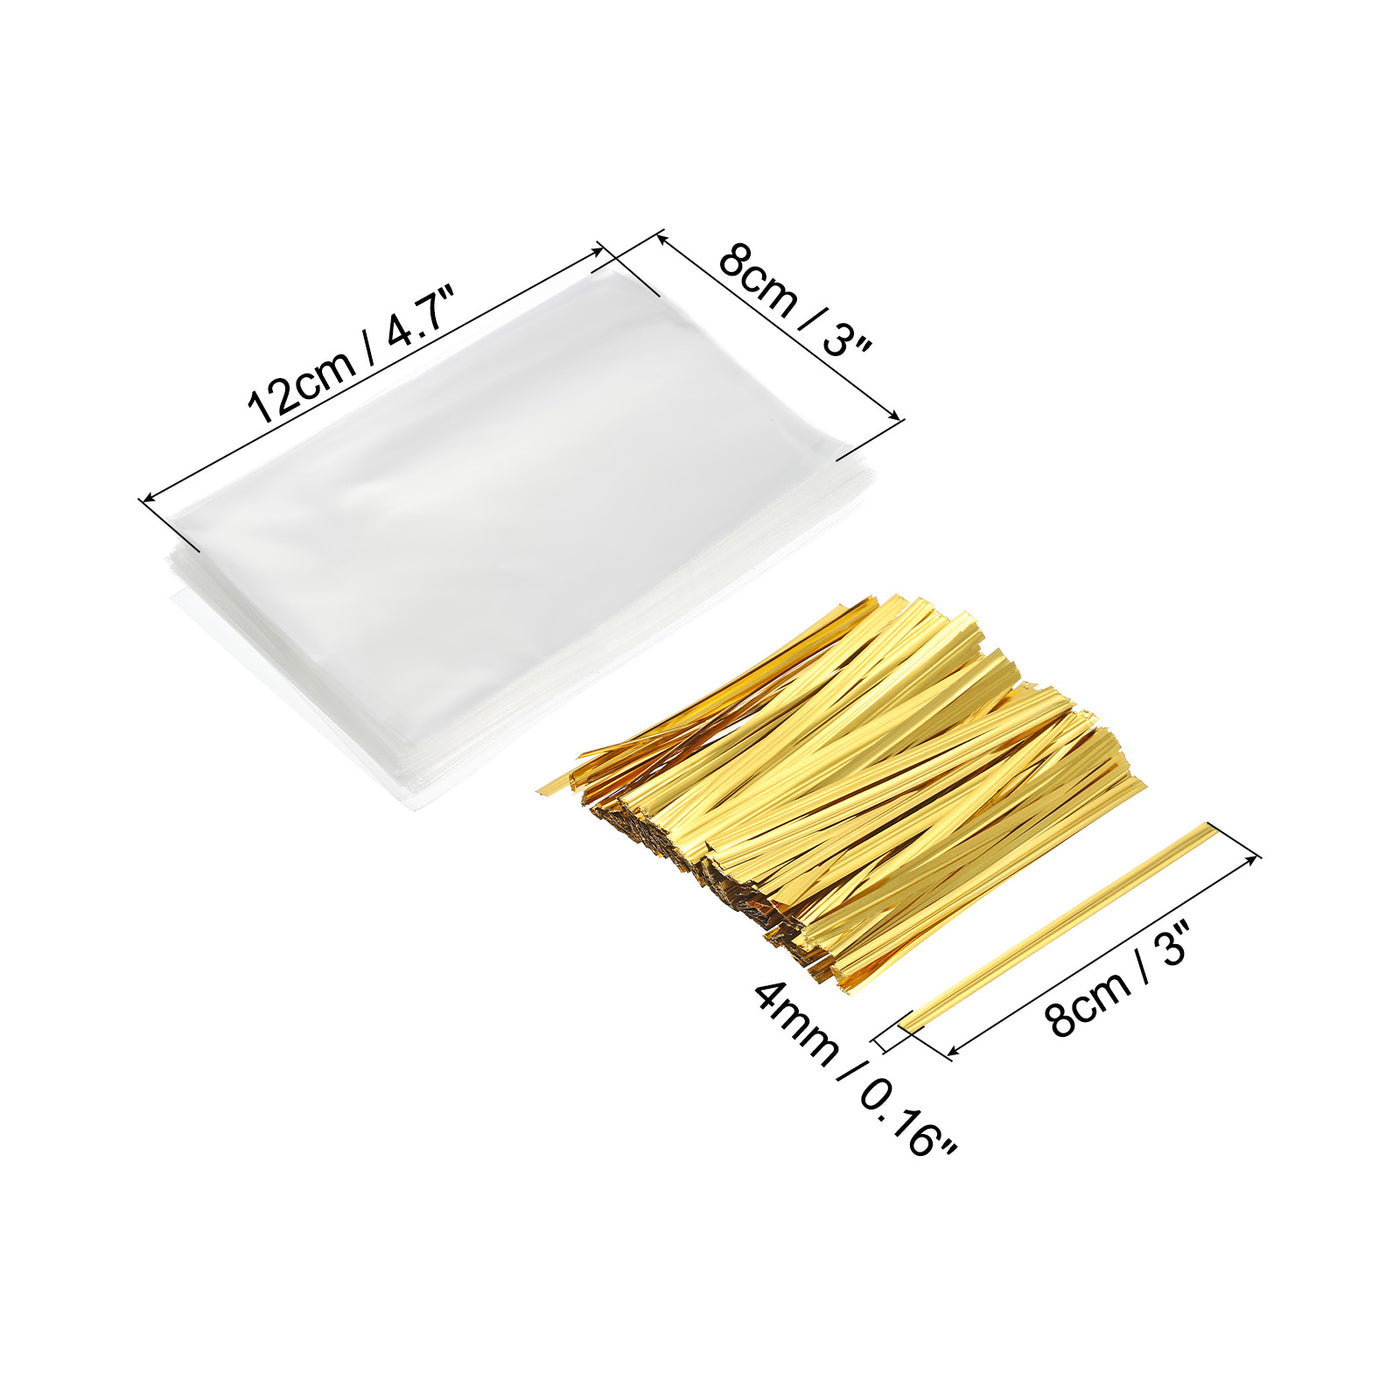 Harfington Clear Plastic Bags 4.5"x3" with 3" Foil Twist Ties Gold Tone 100 Set